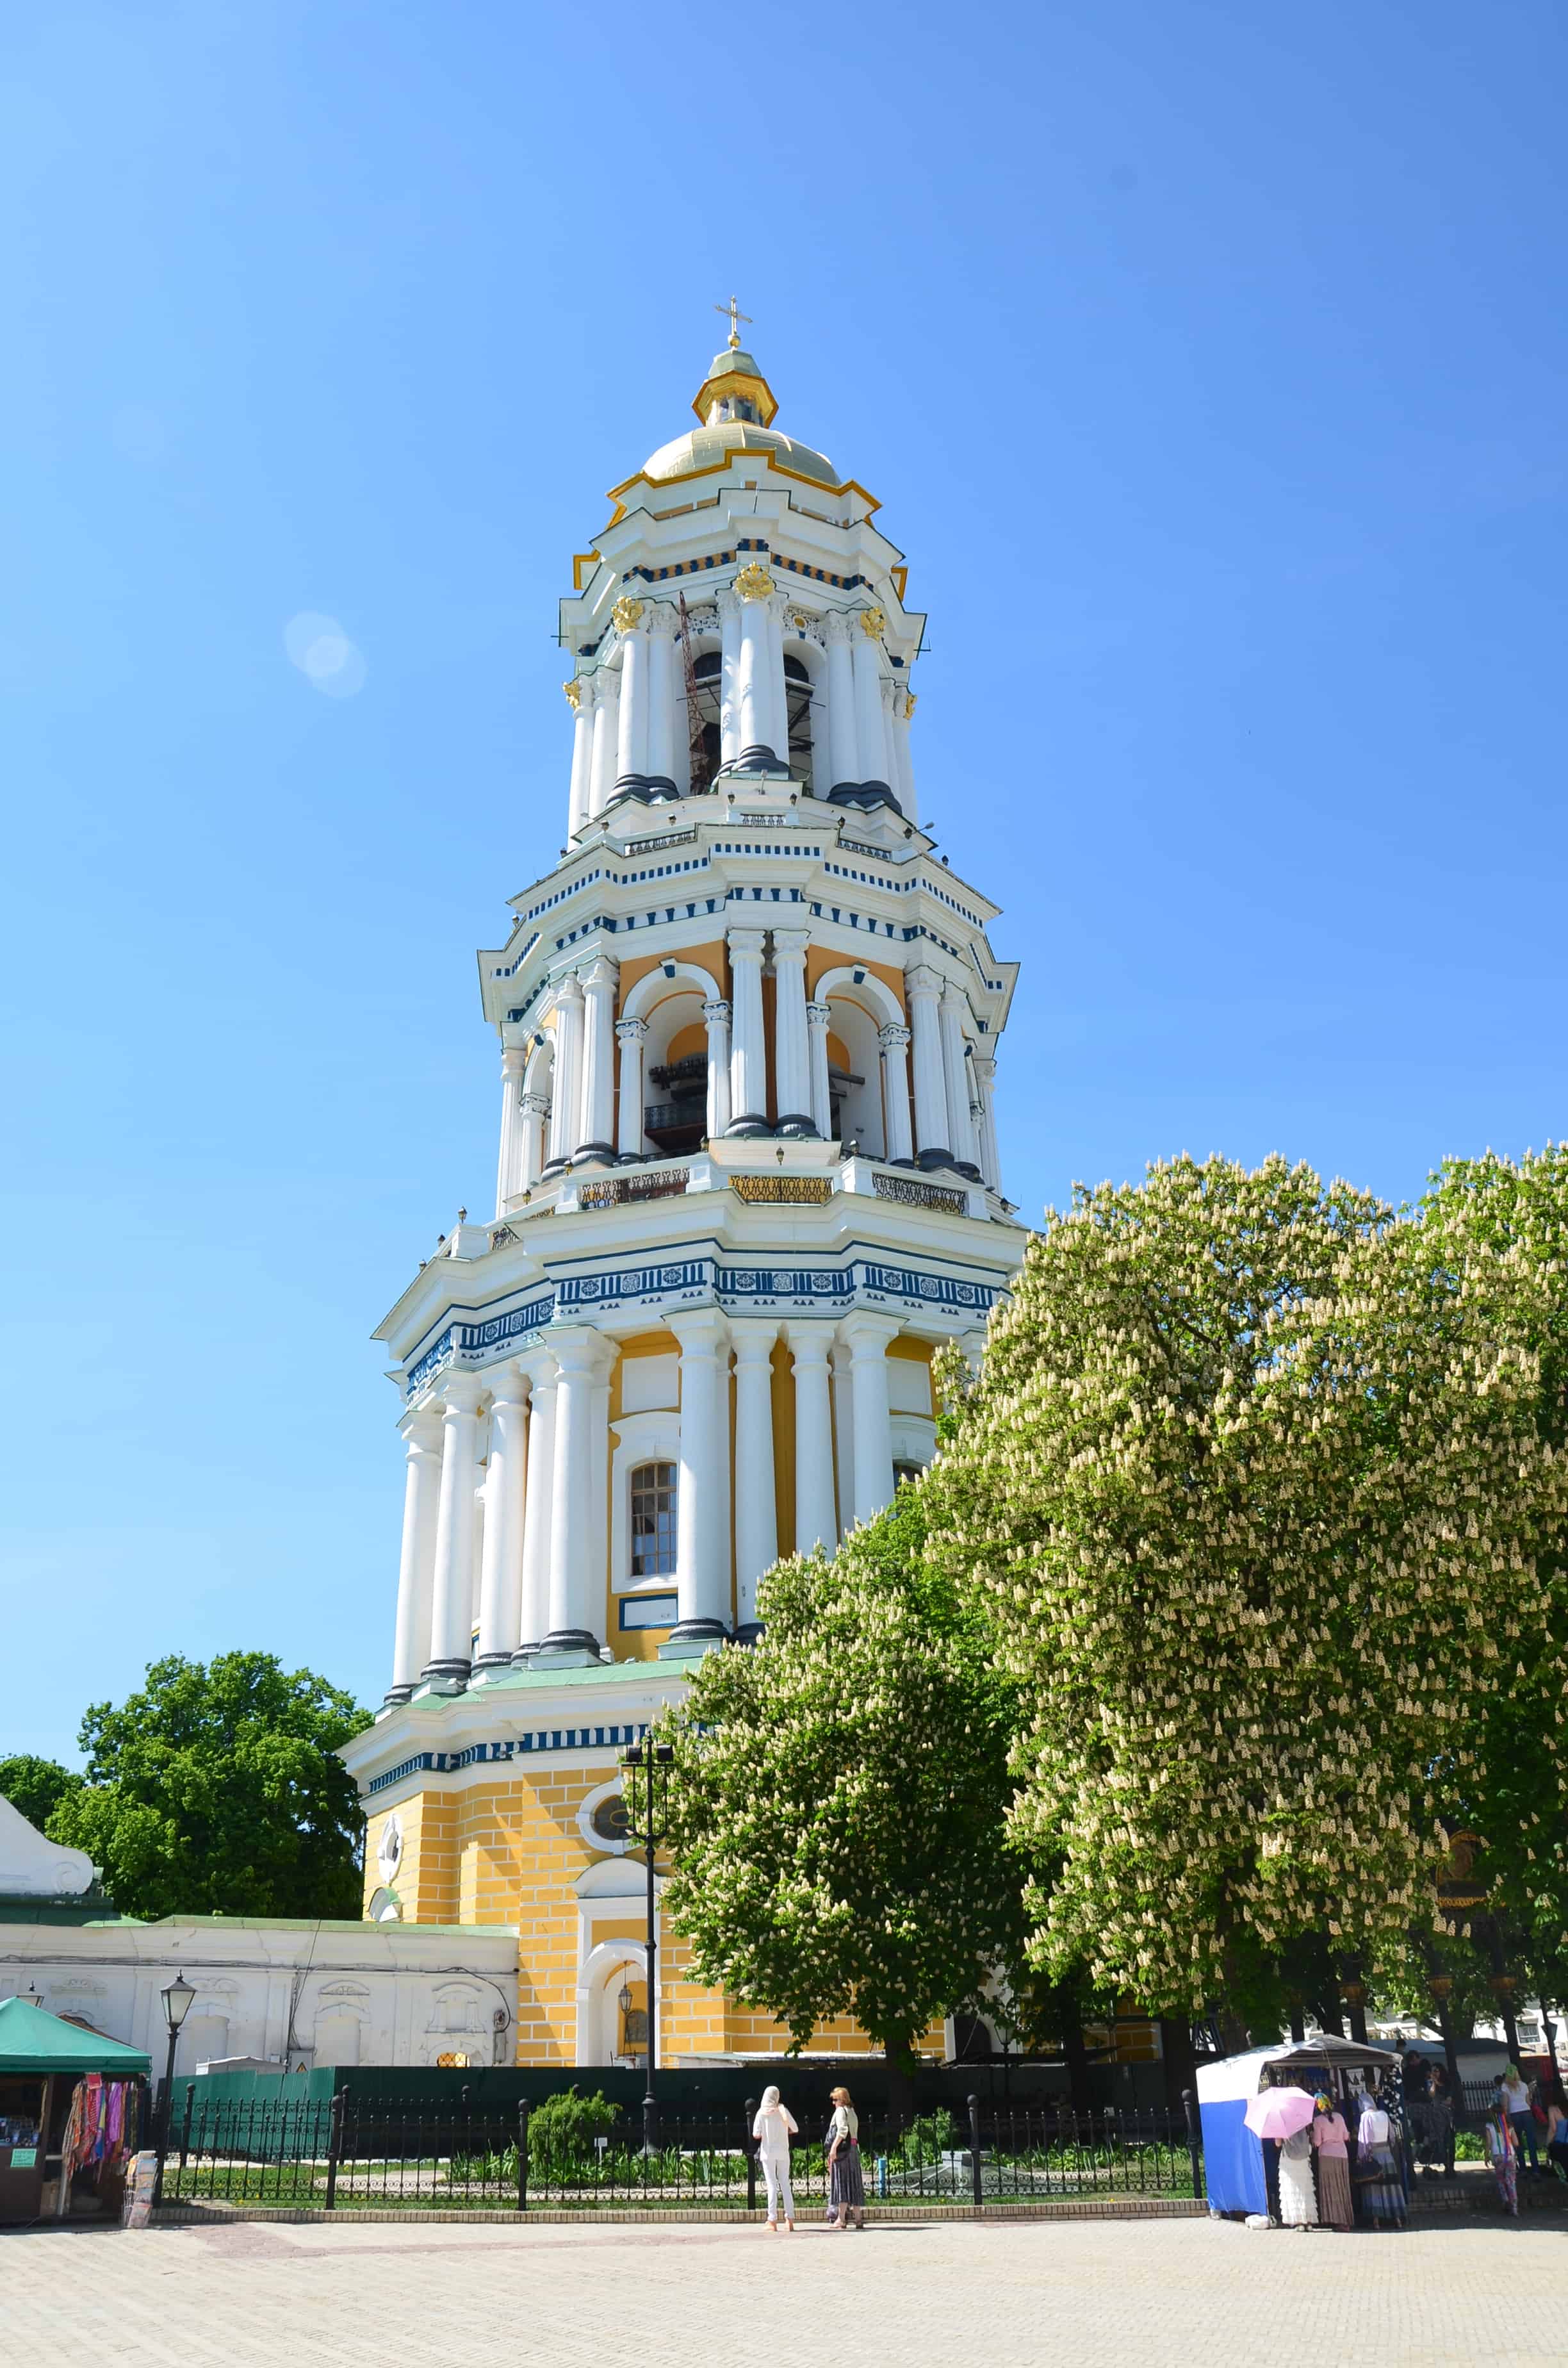 Great Lavra Bell Tower at Kyiv Pechersk Lavra in Kyiv, Ukraine